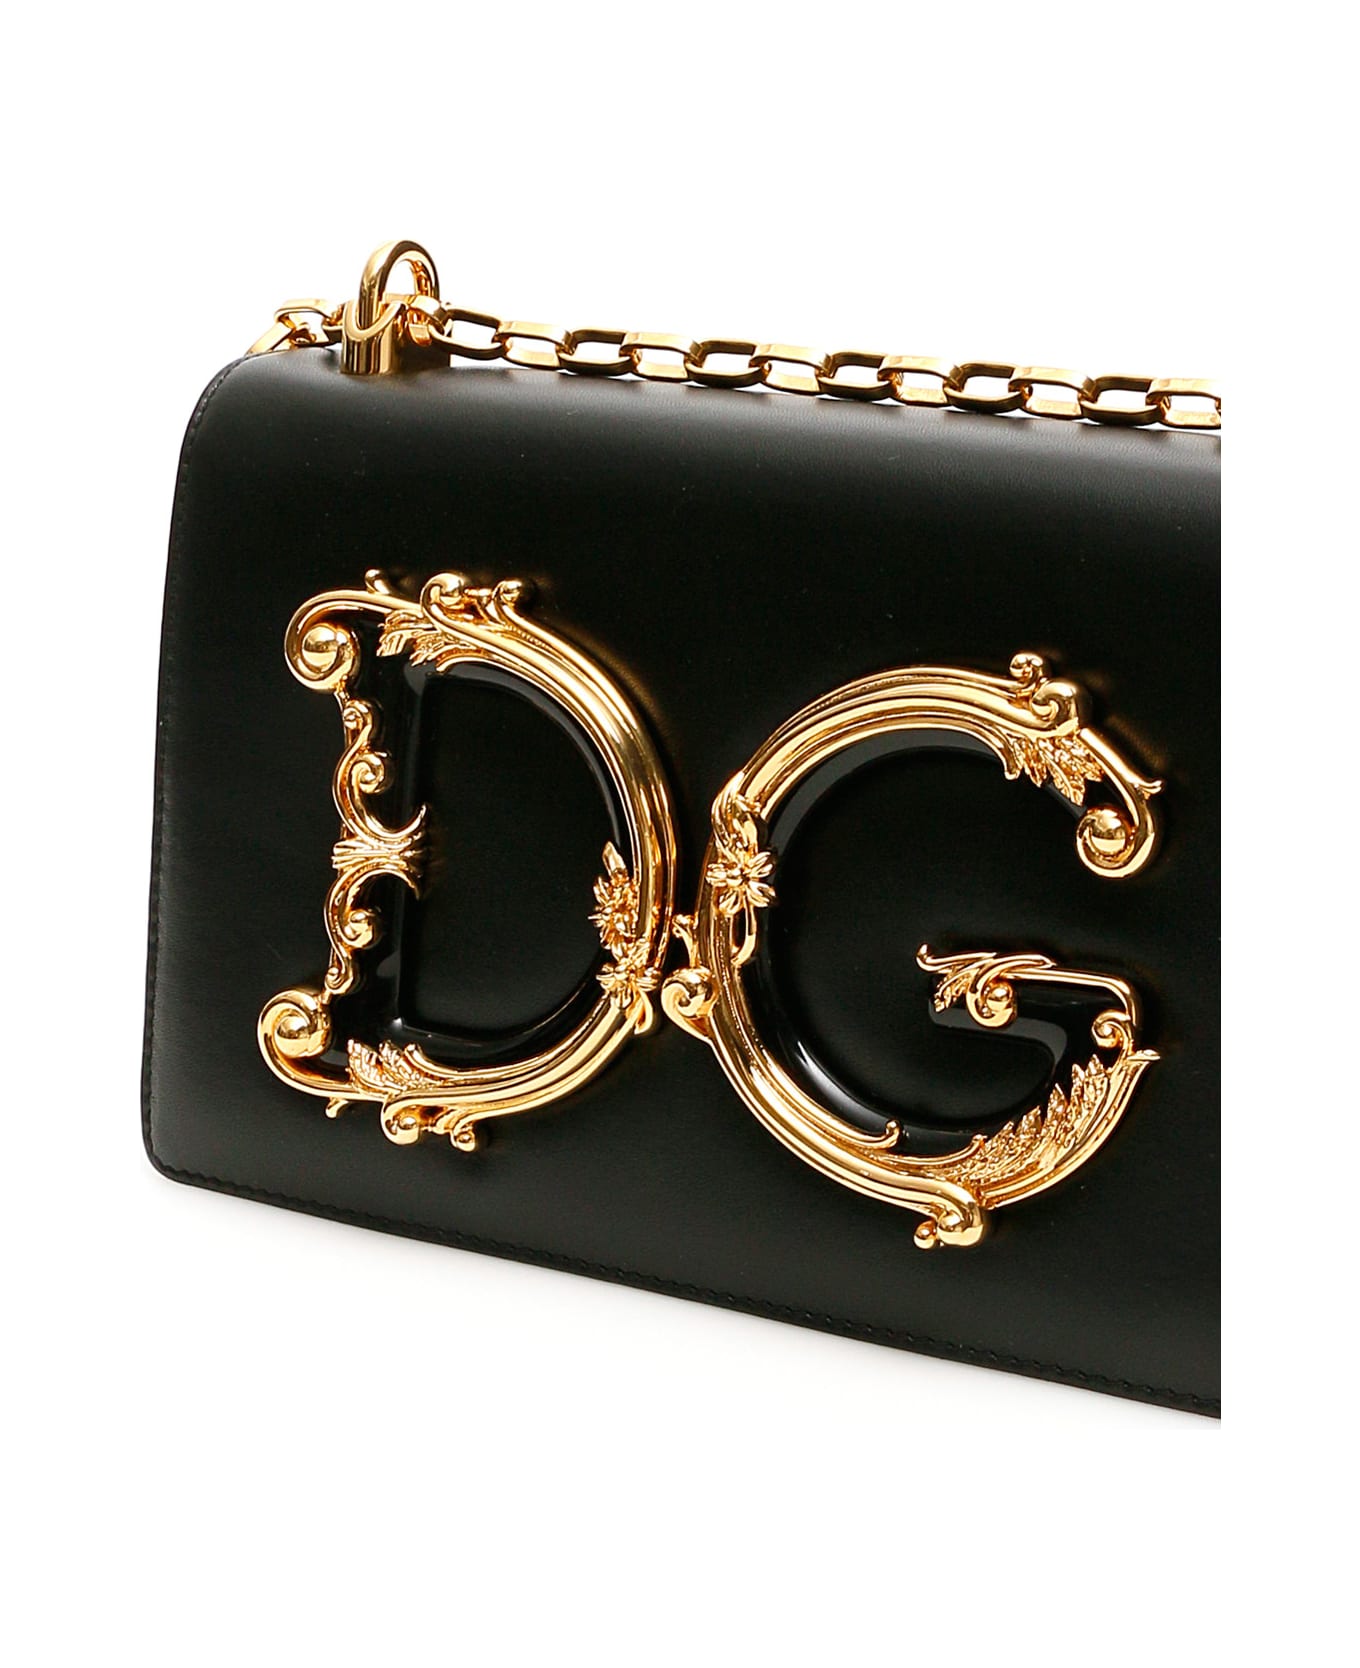 Dolce & Gabbana Nappa Leather Dg Girls Bag - Nero ショルダーバッグ